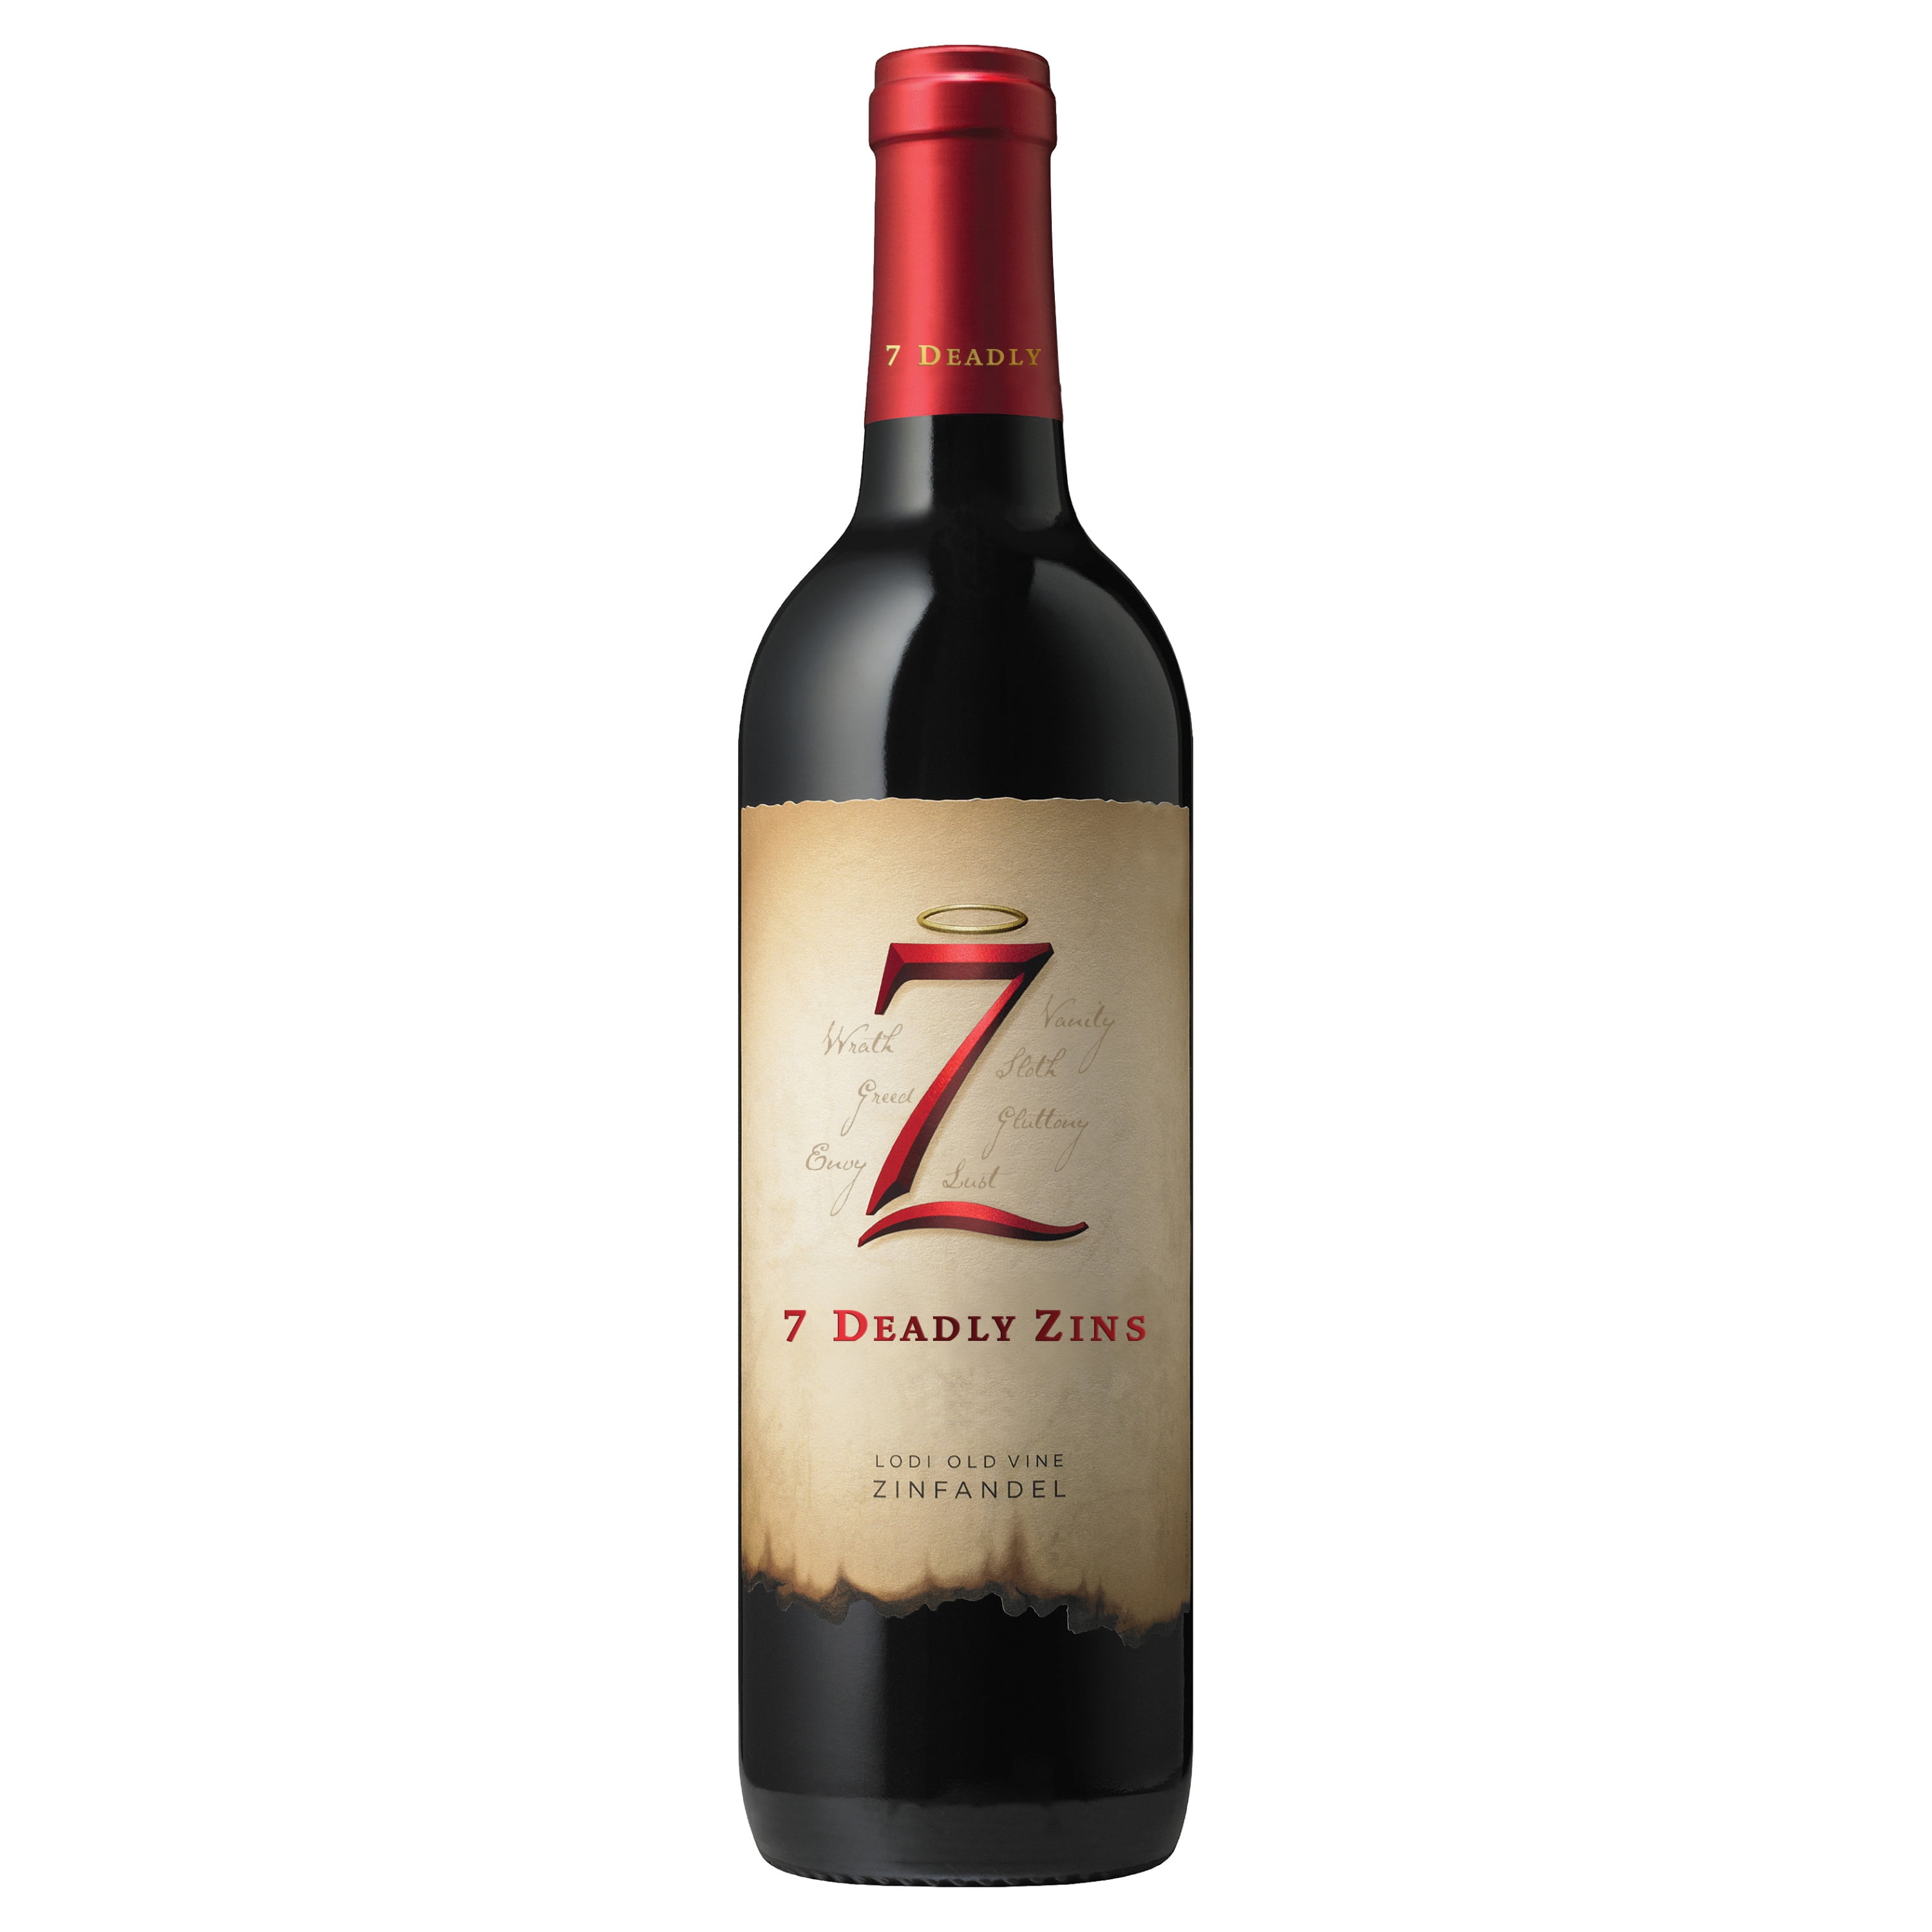 7 Deadly Zins Zinfandel Red Wine 750ml, 2017 California